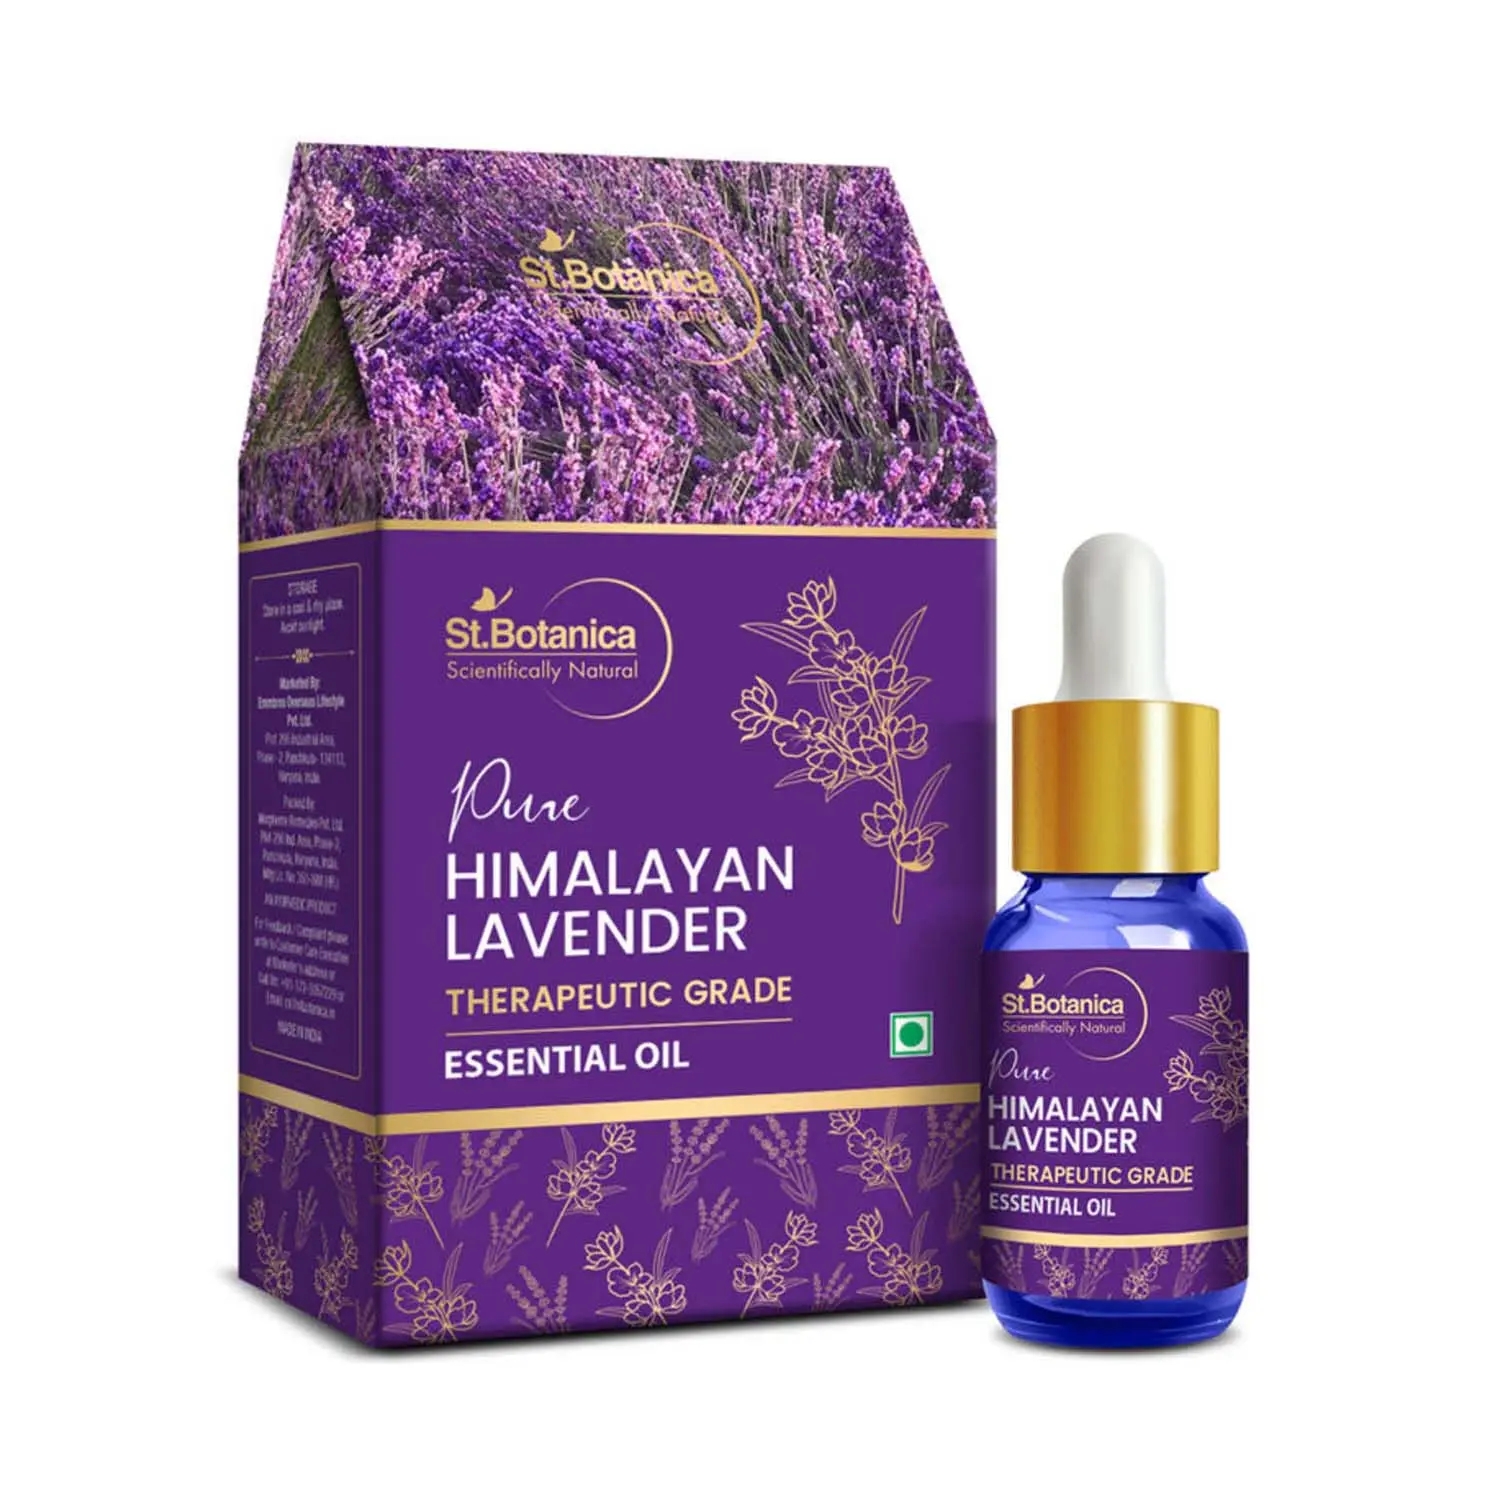 St.Botanica | St.Botanica Pure Himalayan Lavender Essential Oil (15ml)